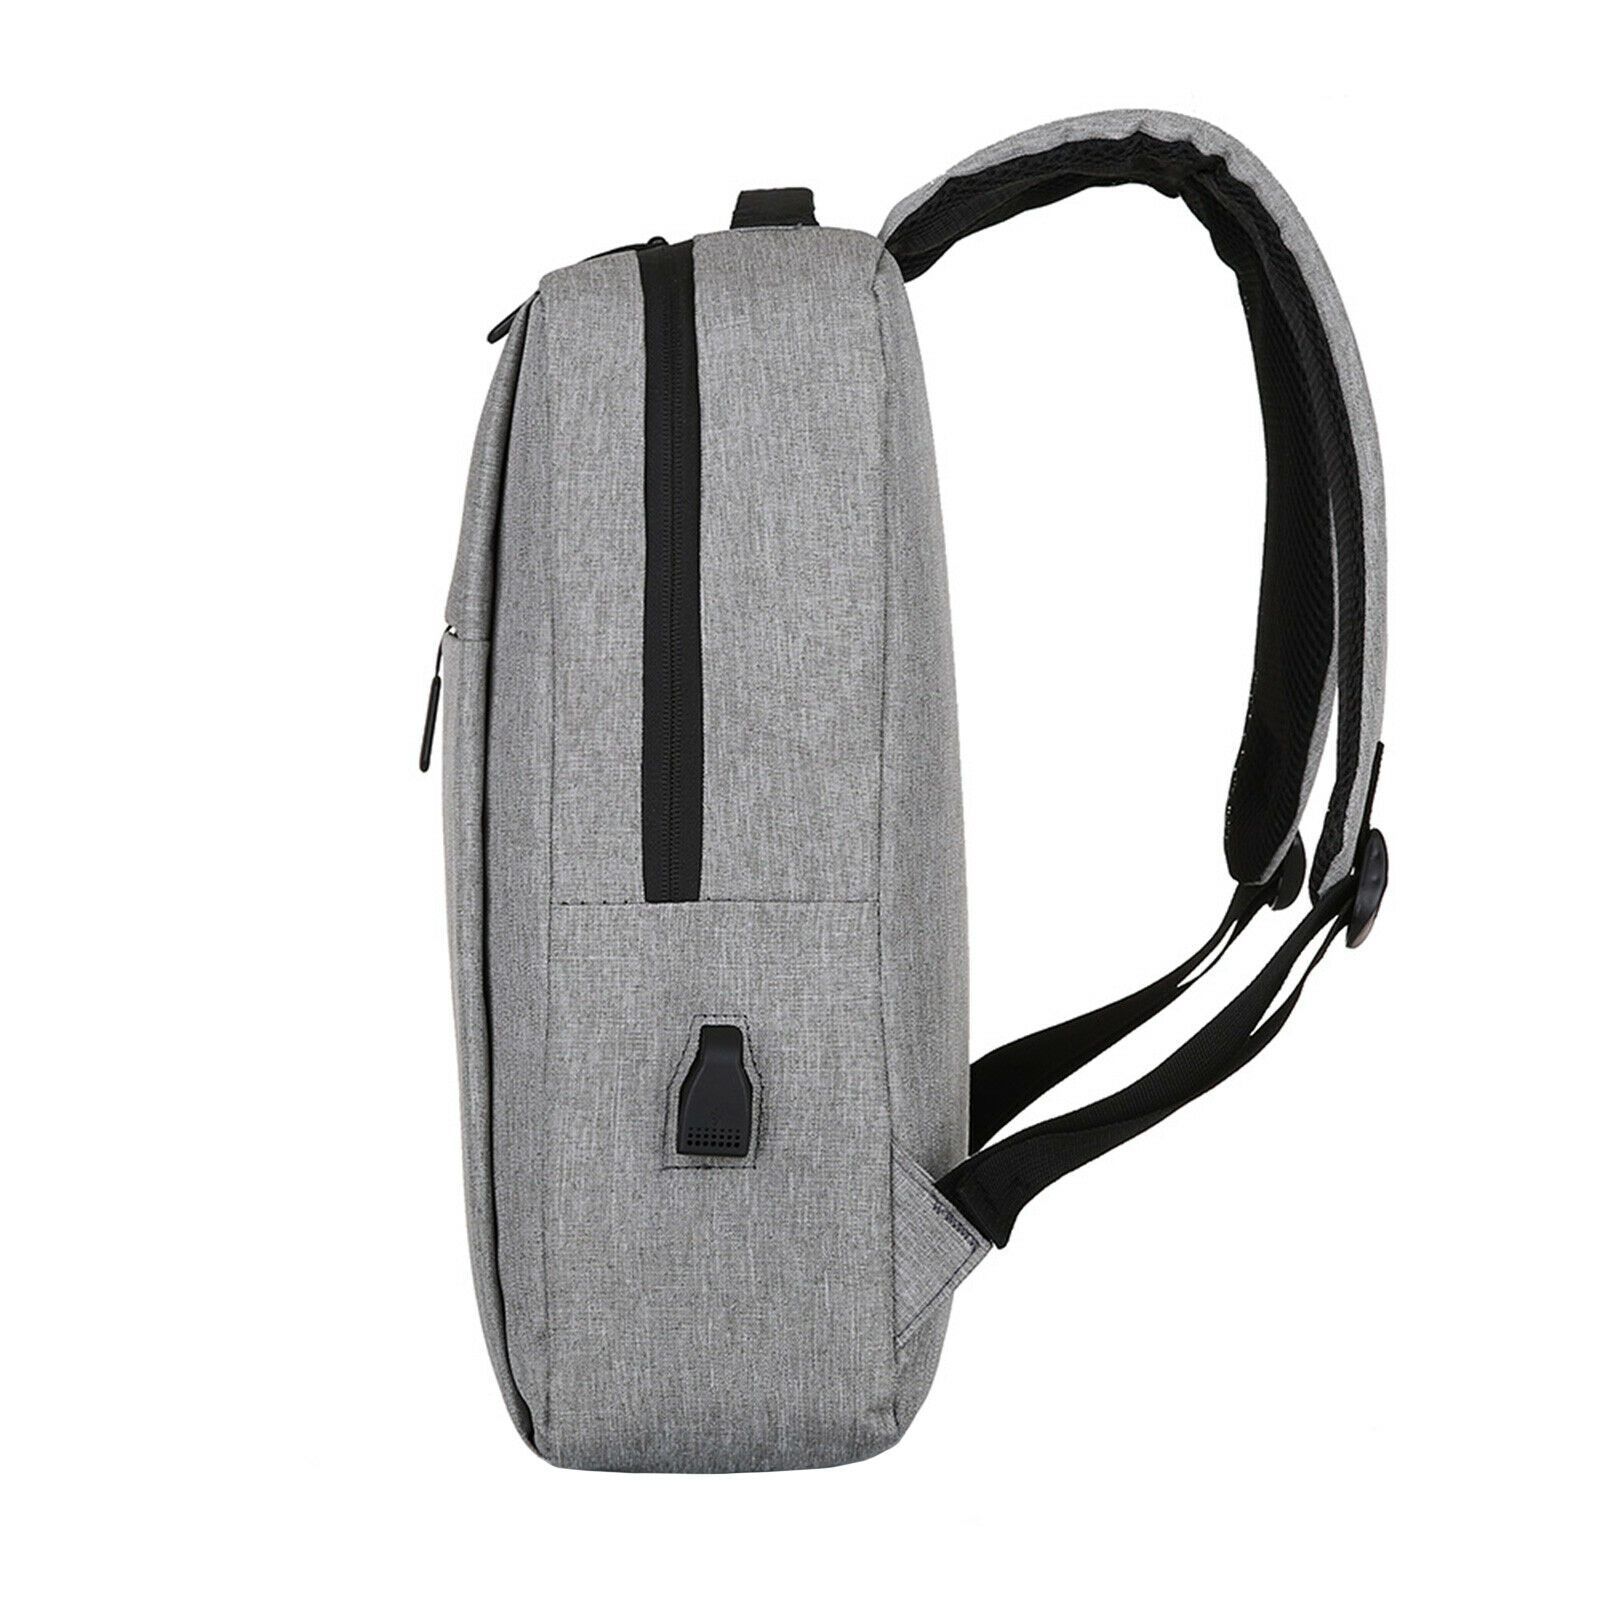 Novaa Bags 16" Slim Casual Waterproof Laptop Backpack with USB Charging Port Gray - image 4 of 5